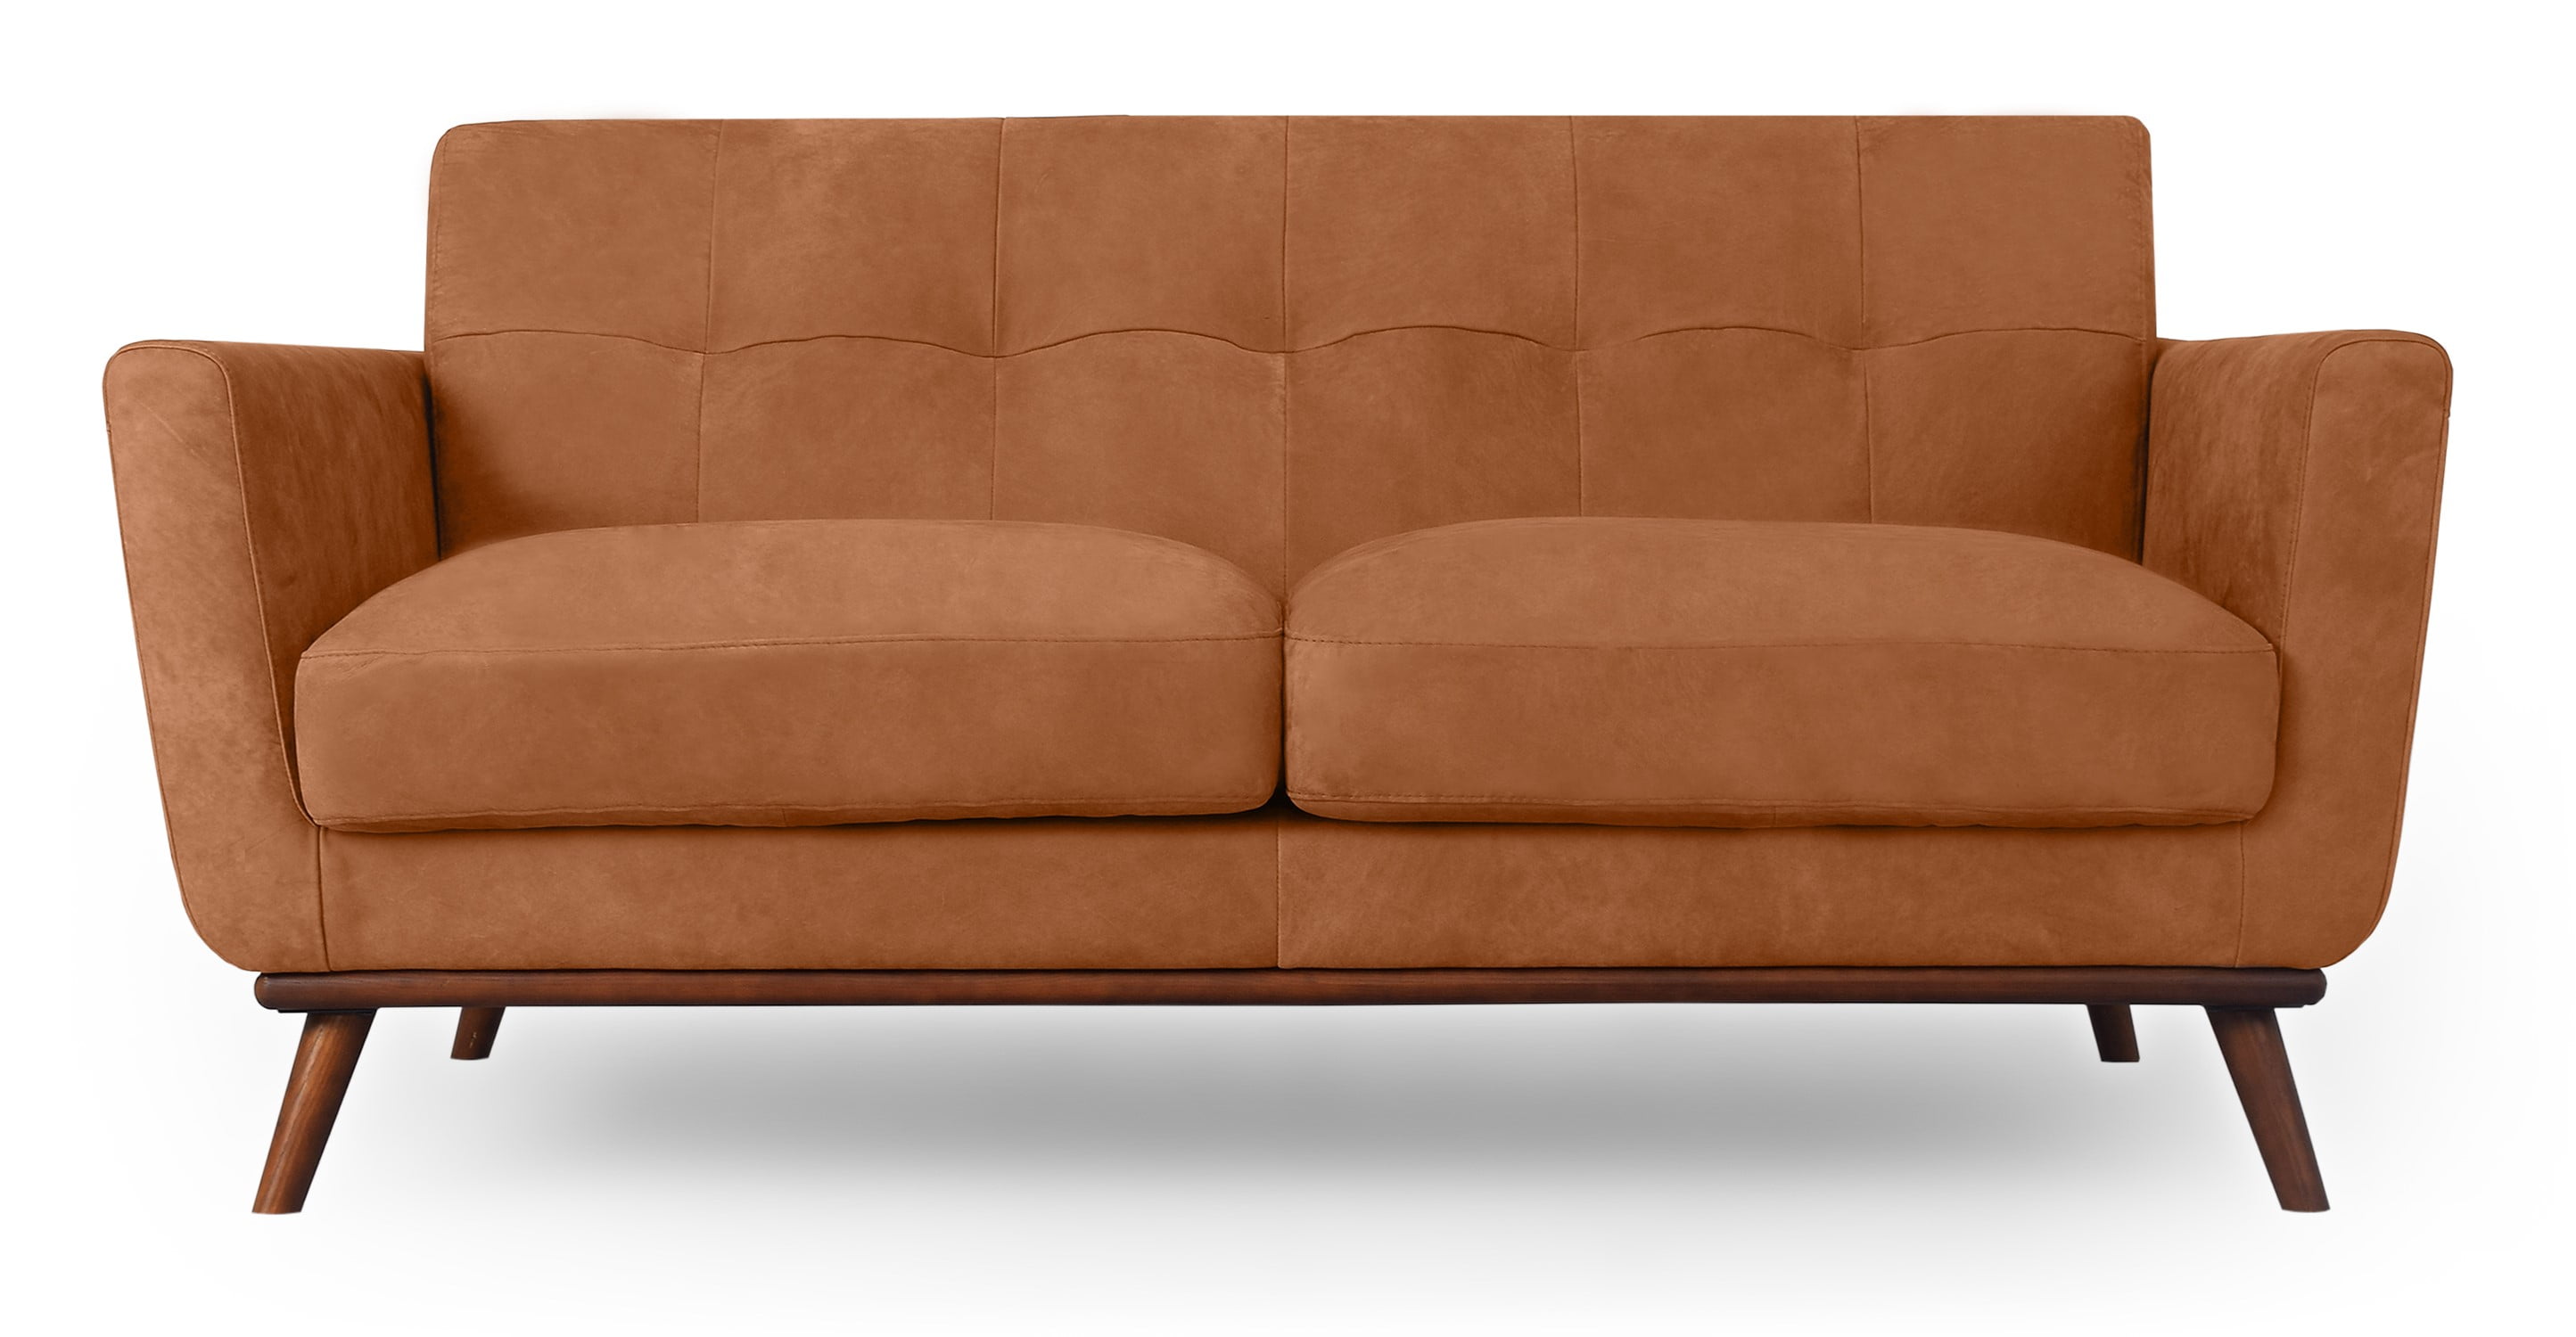 mid century modern leather sleeper sofa